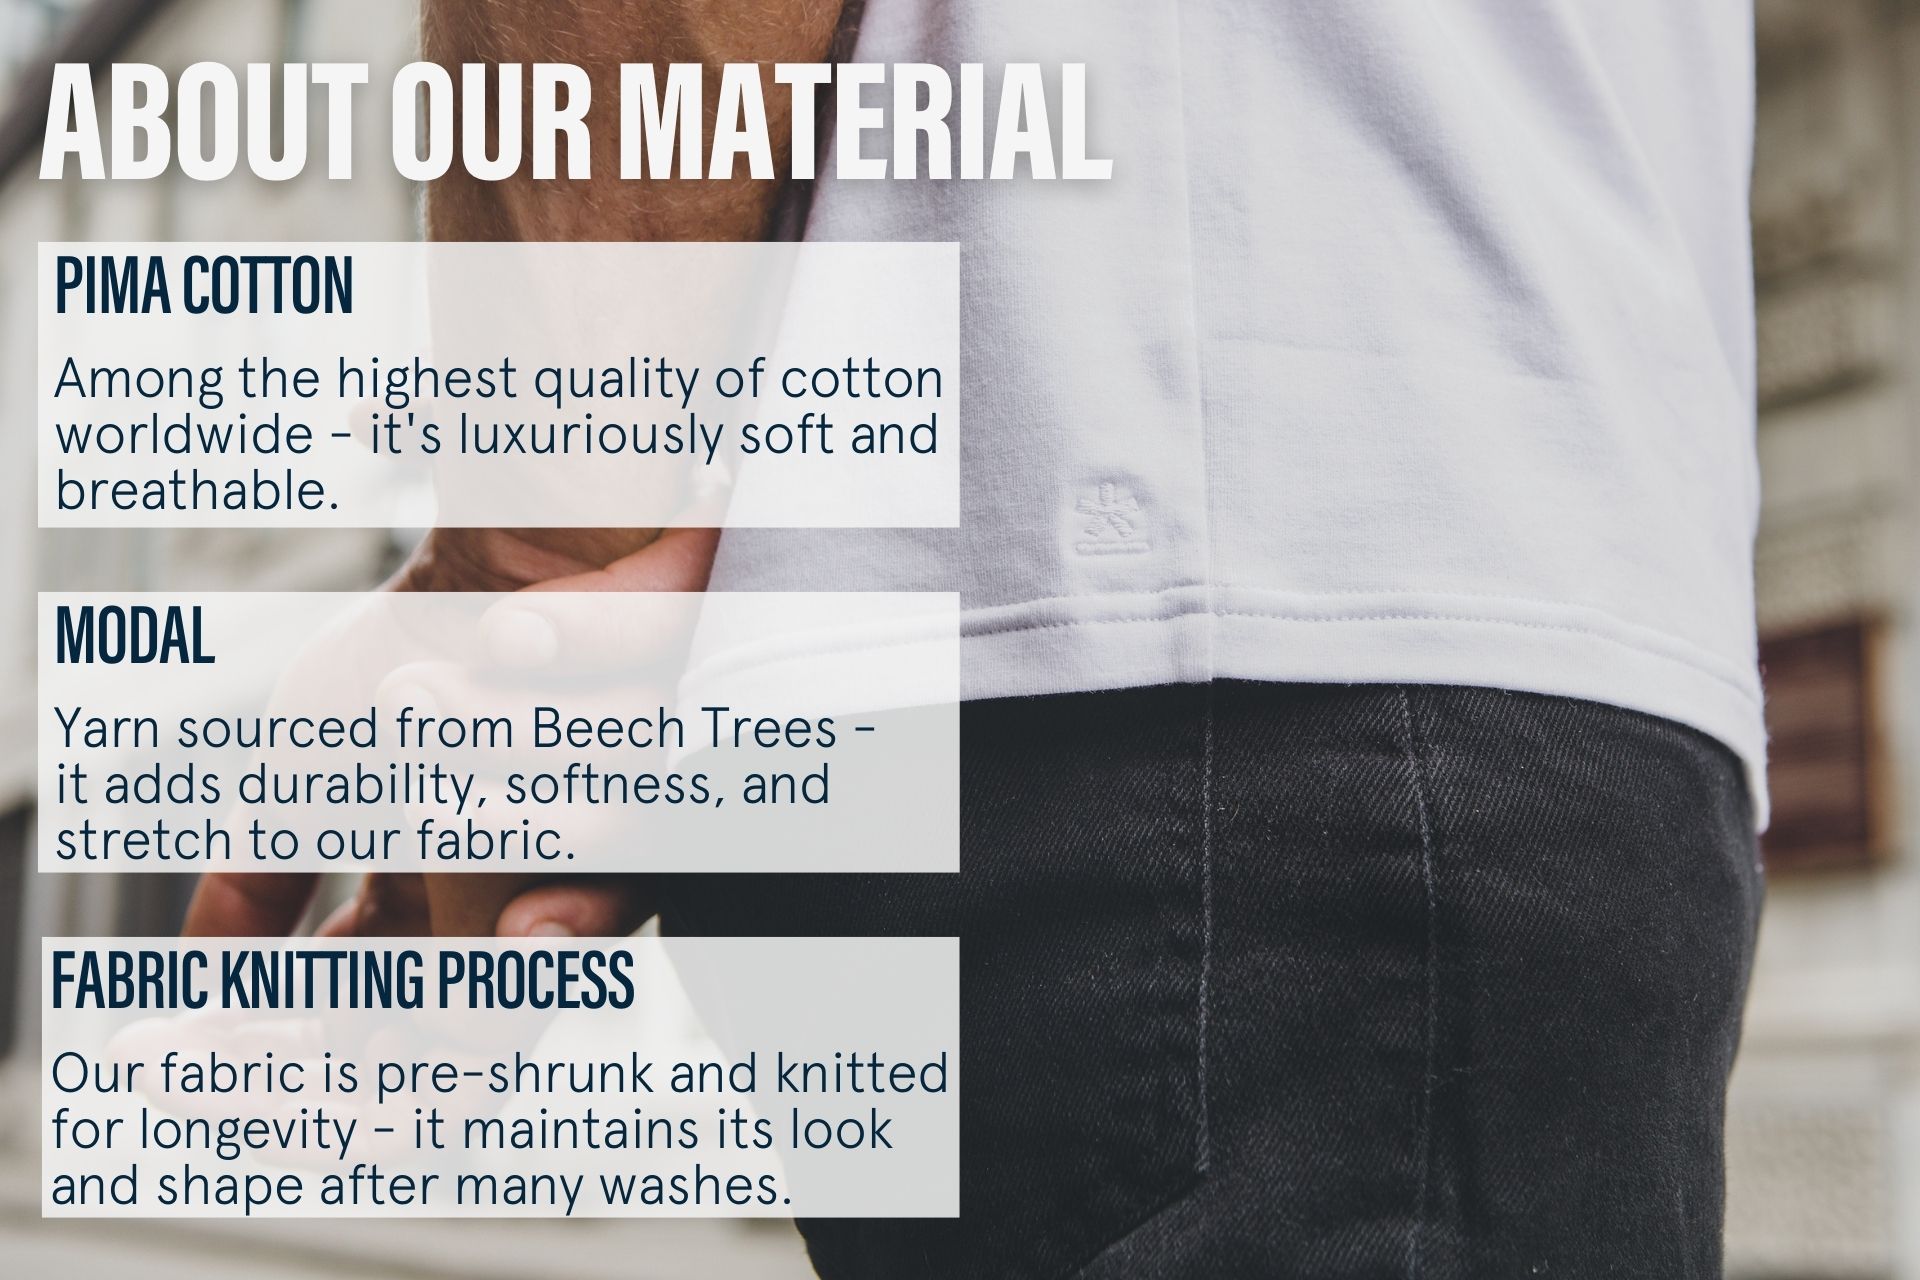 The T-Shirt materials